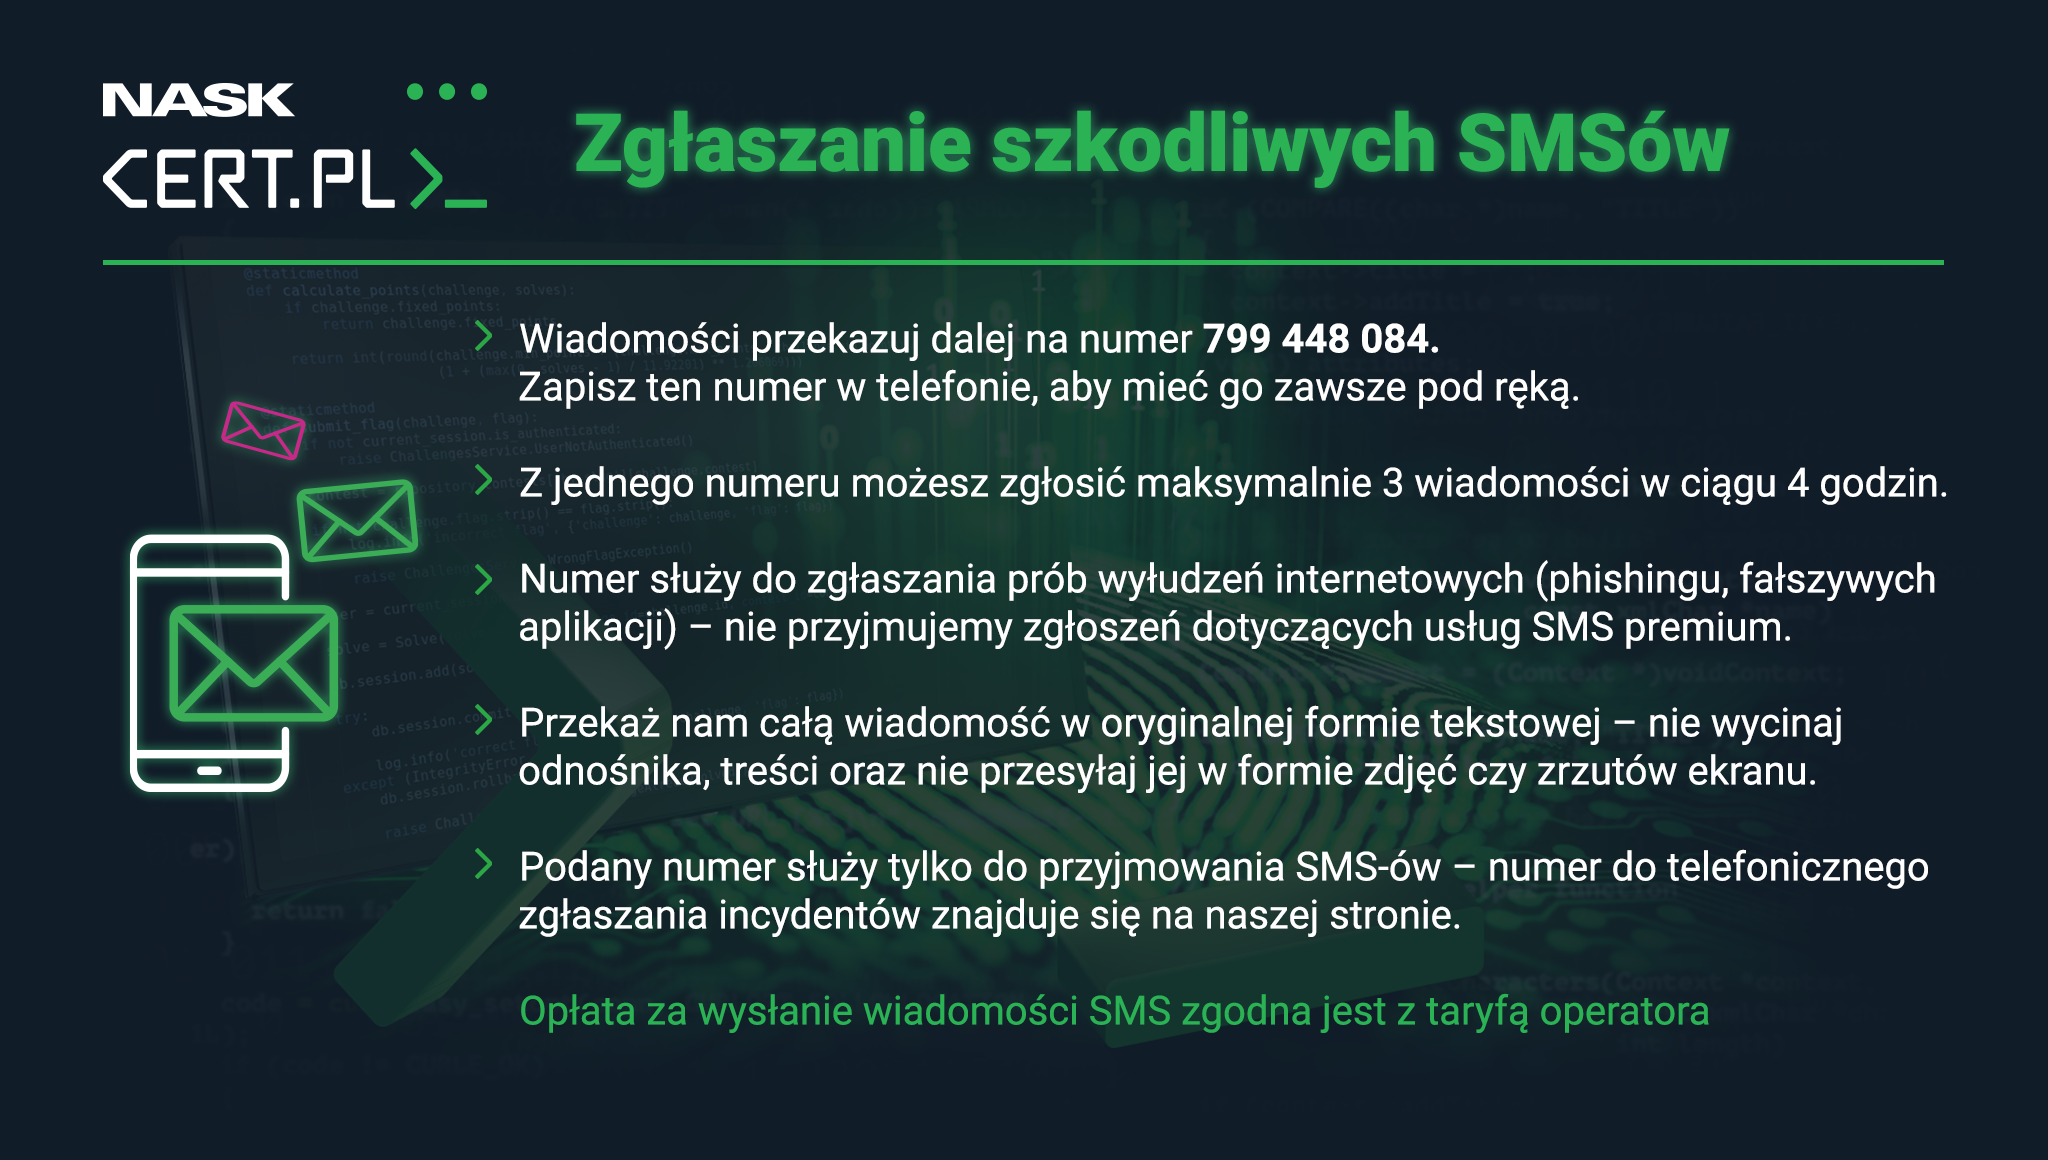 nask-i-cert-polska-dezinformacja-oszustwa-rekomendacje 03